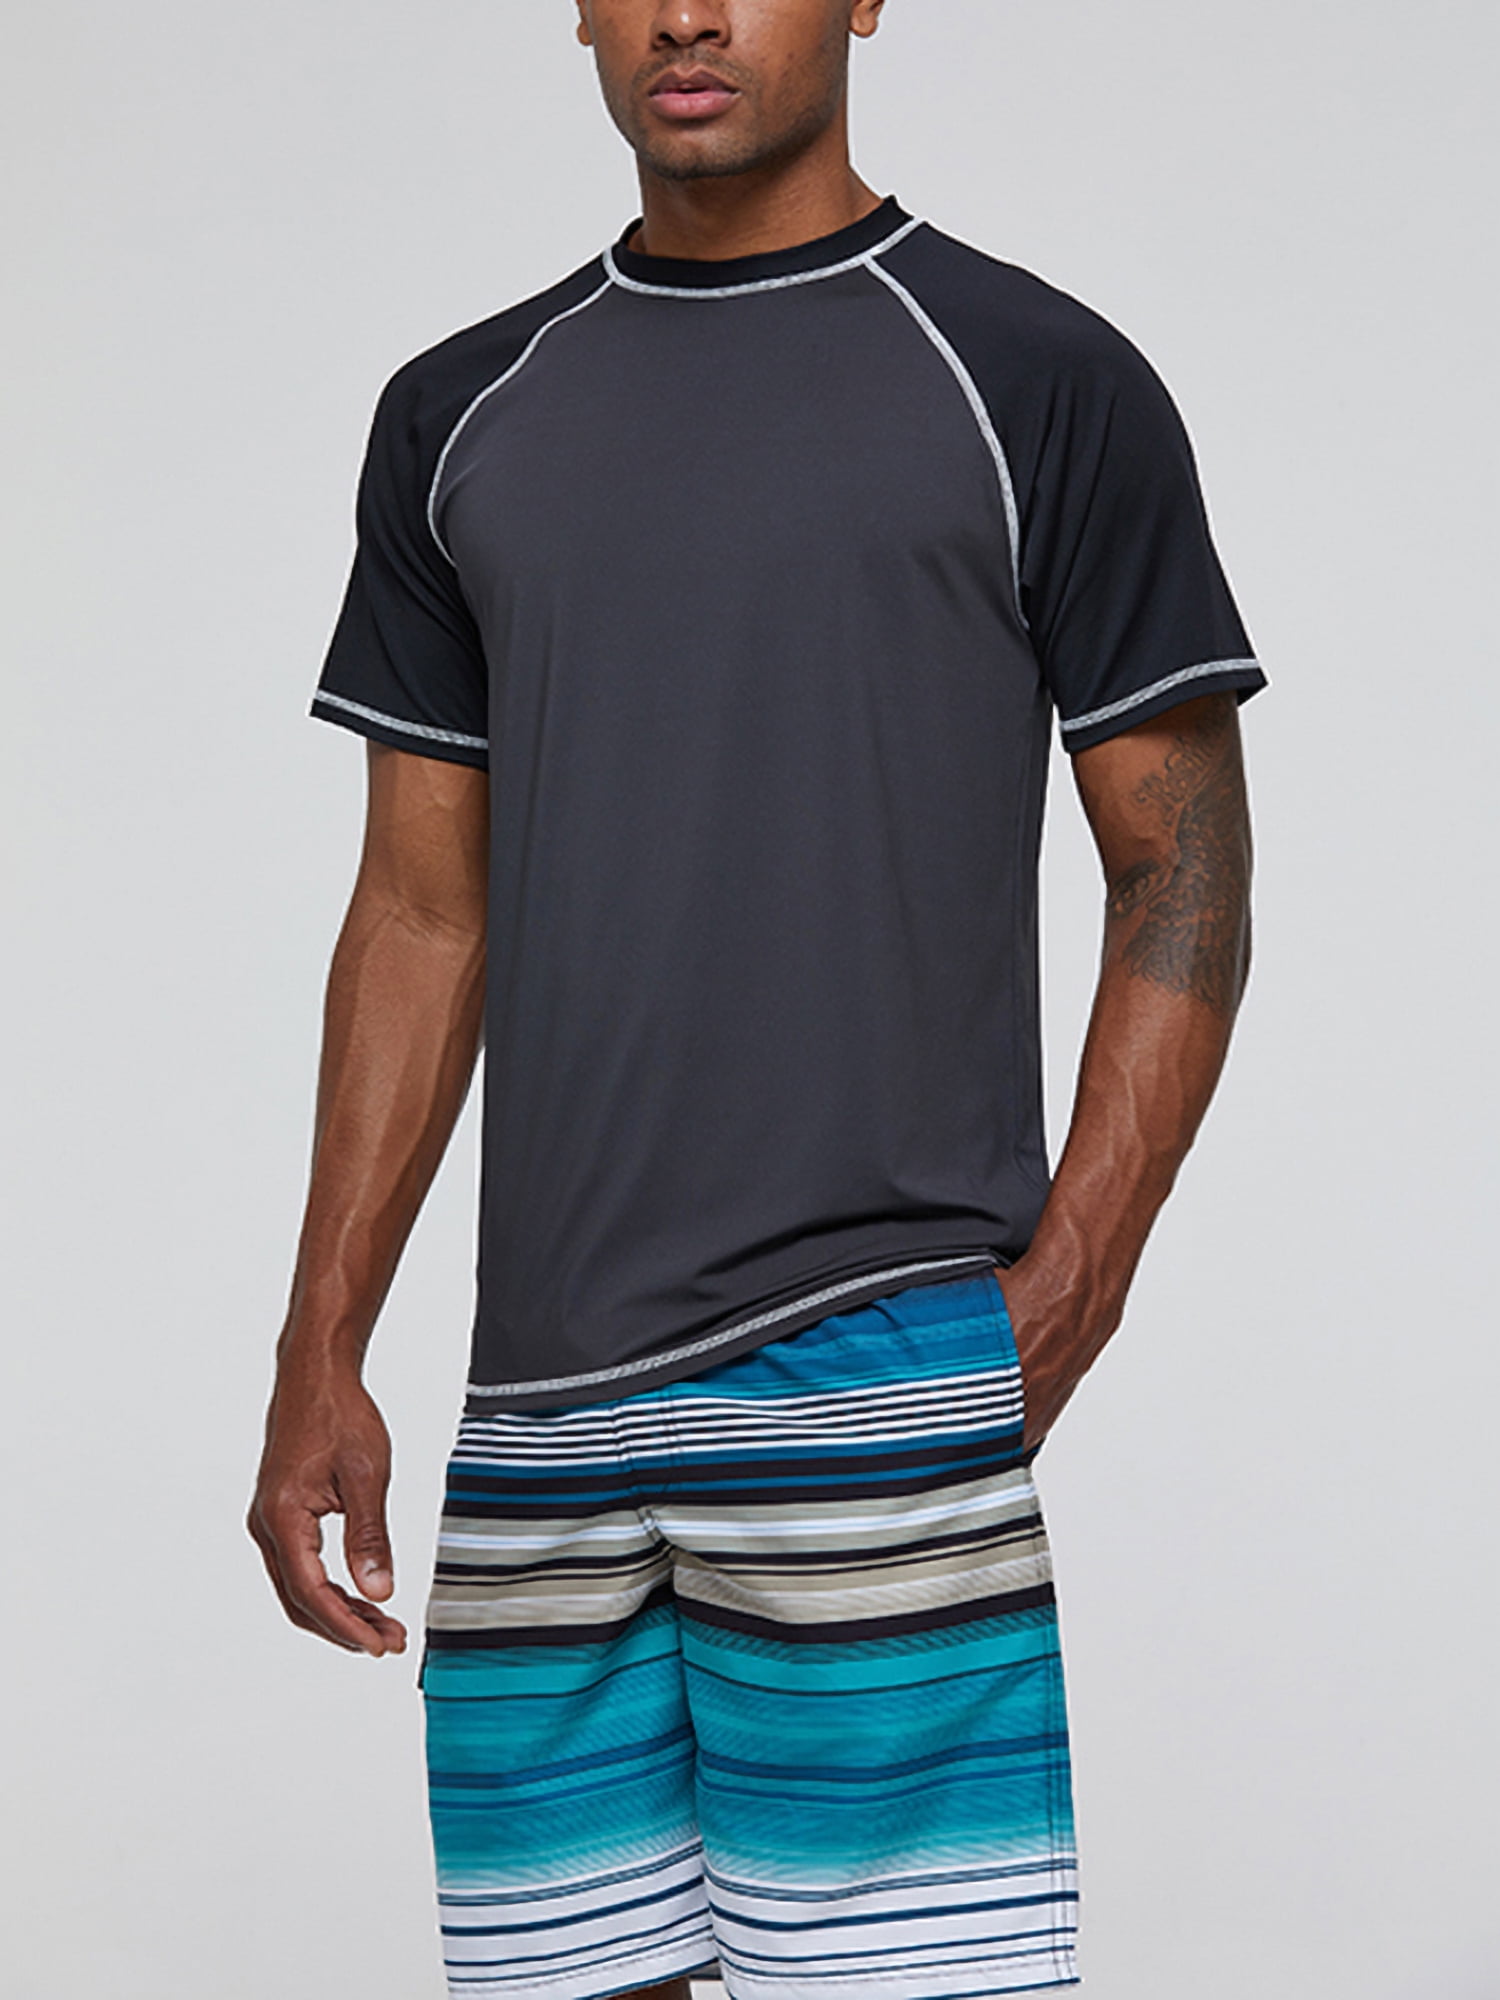 Mens Rash Guard UV Sun Protection Swim Shirt Swimming Top Summer Swimwear Shirt